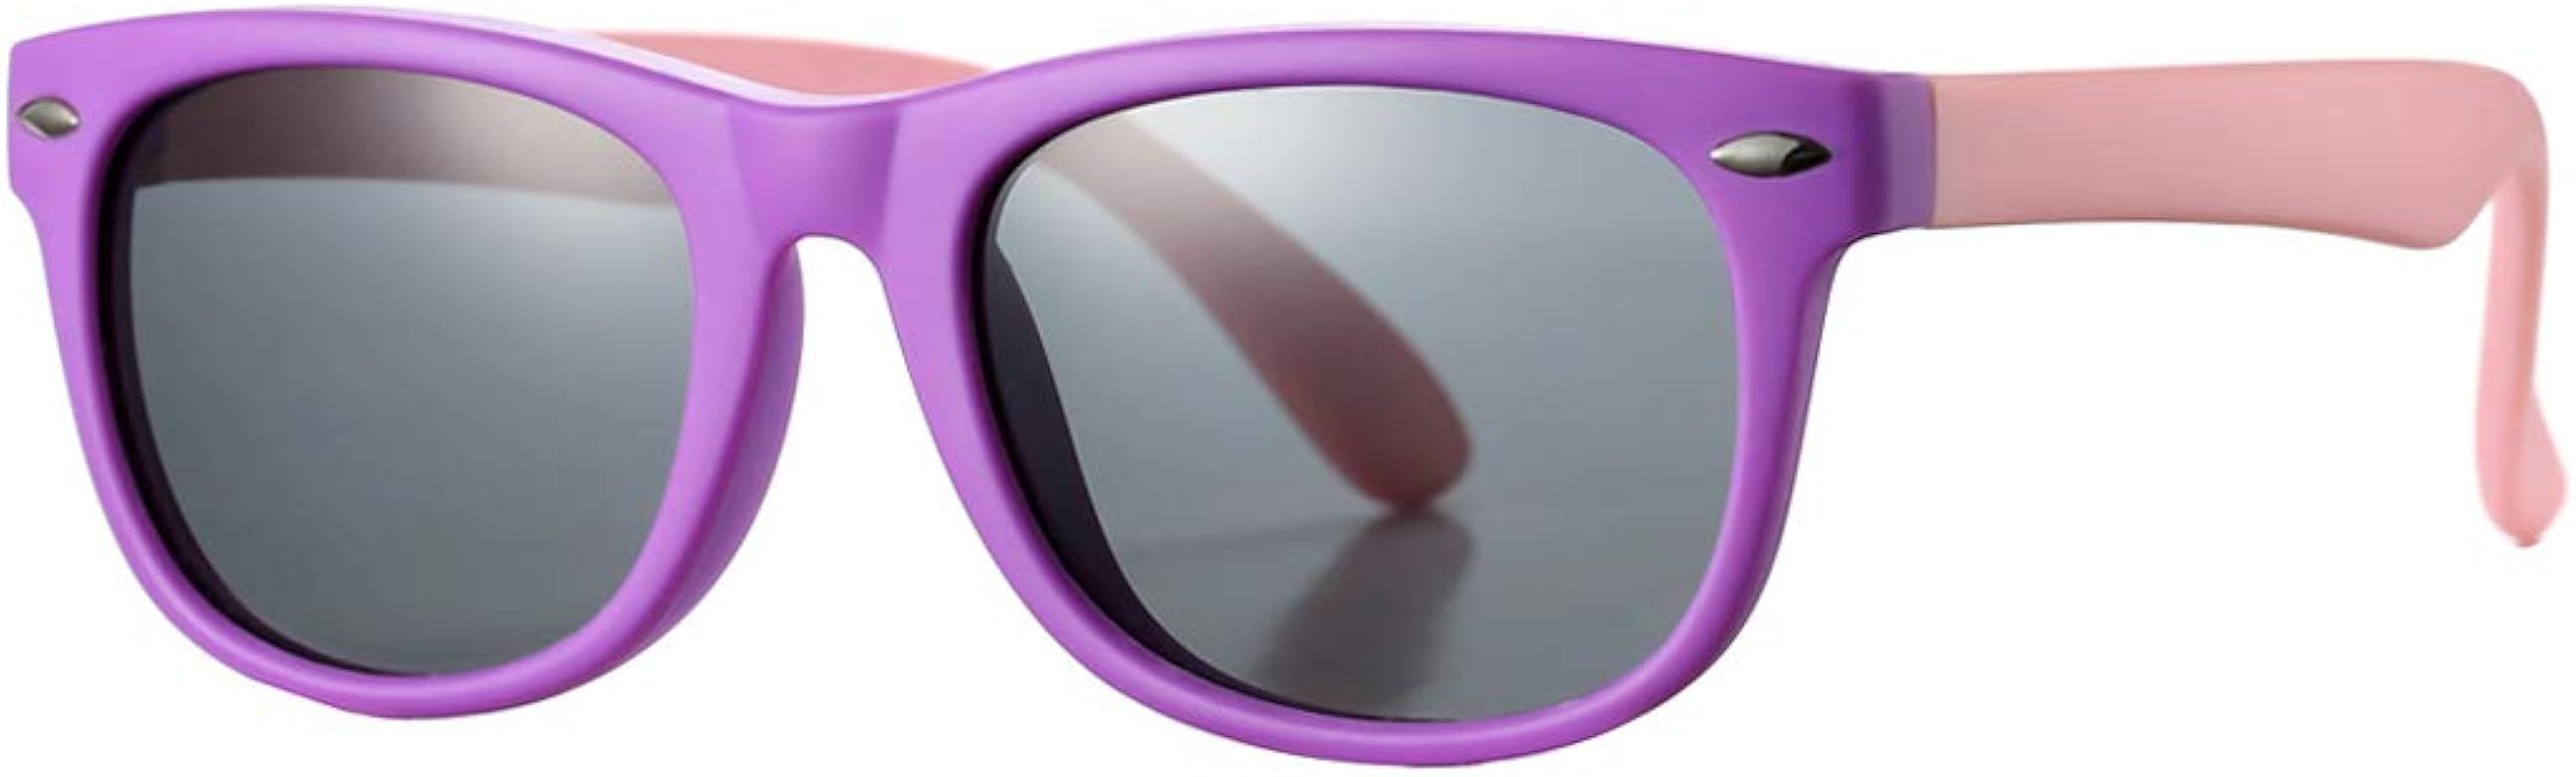 COASION Kids Polarized Sunglasses TPEE Rubber Flexible Shades for Girls Boys Age 3-9 | Amazon (US)